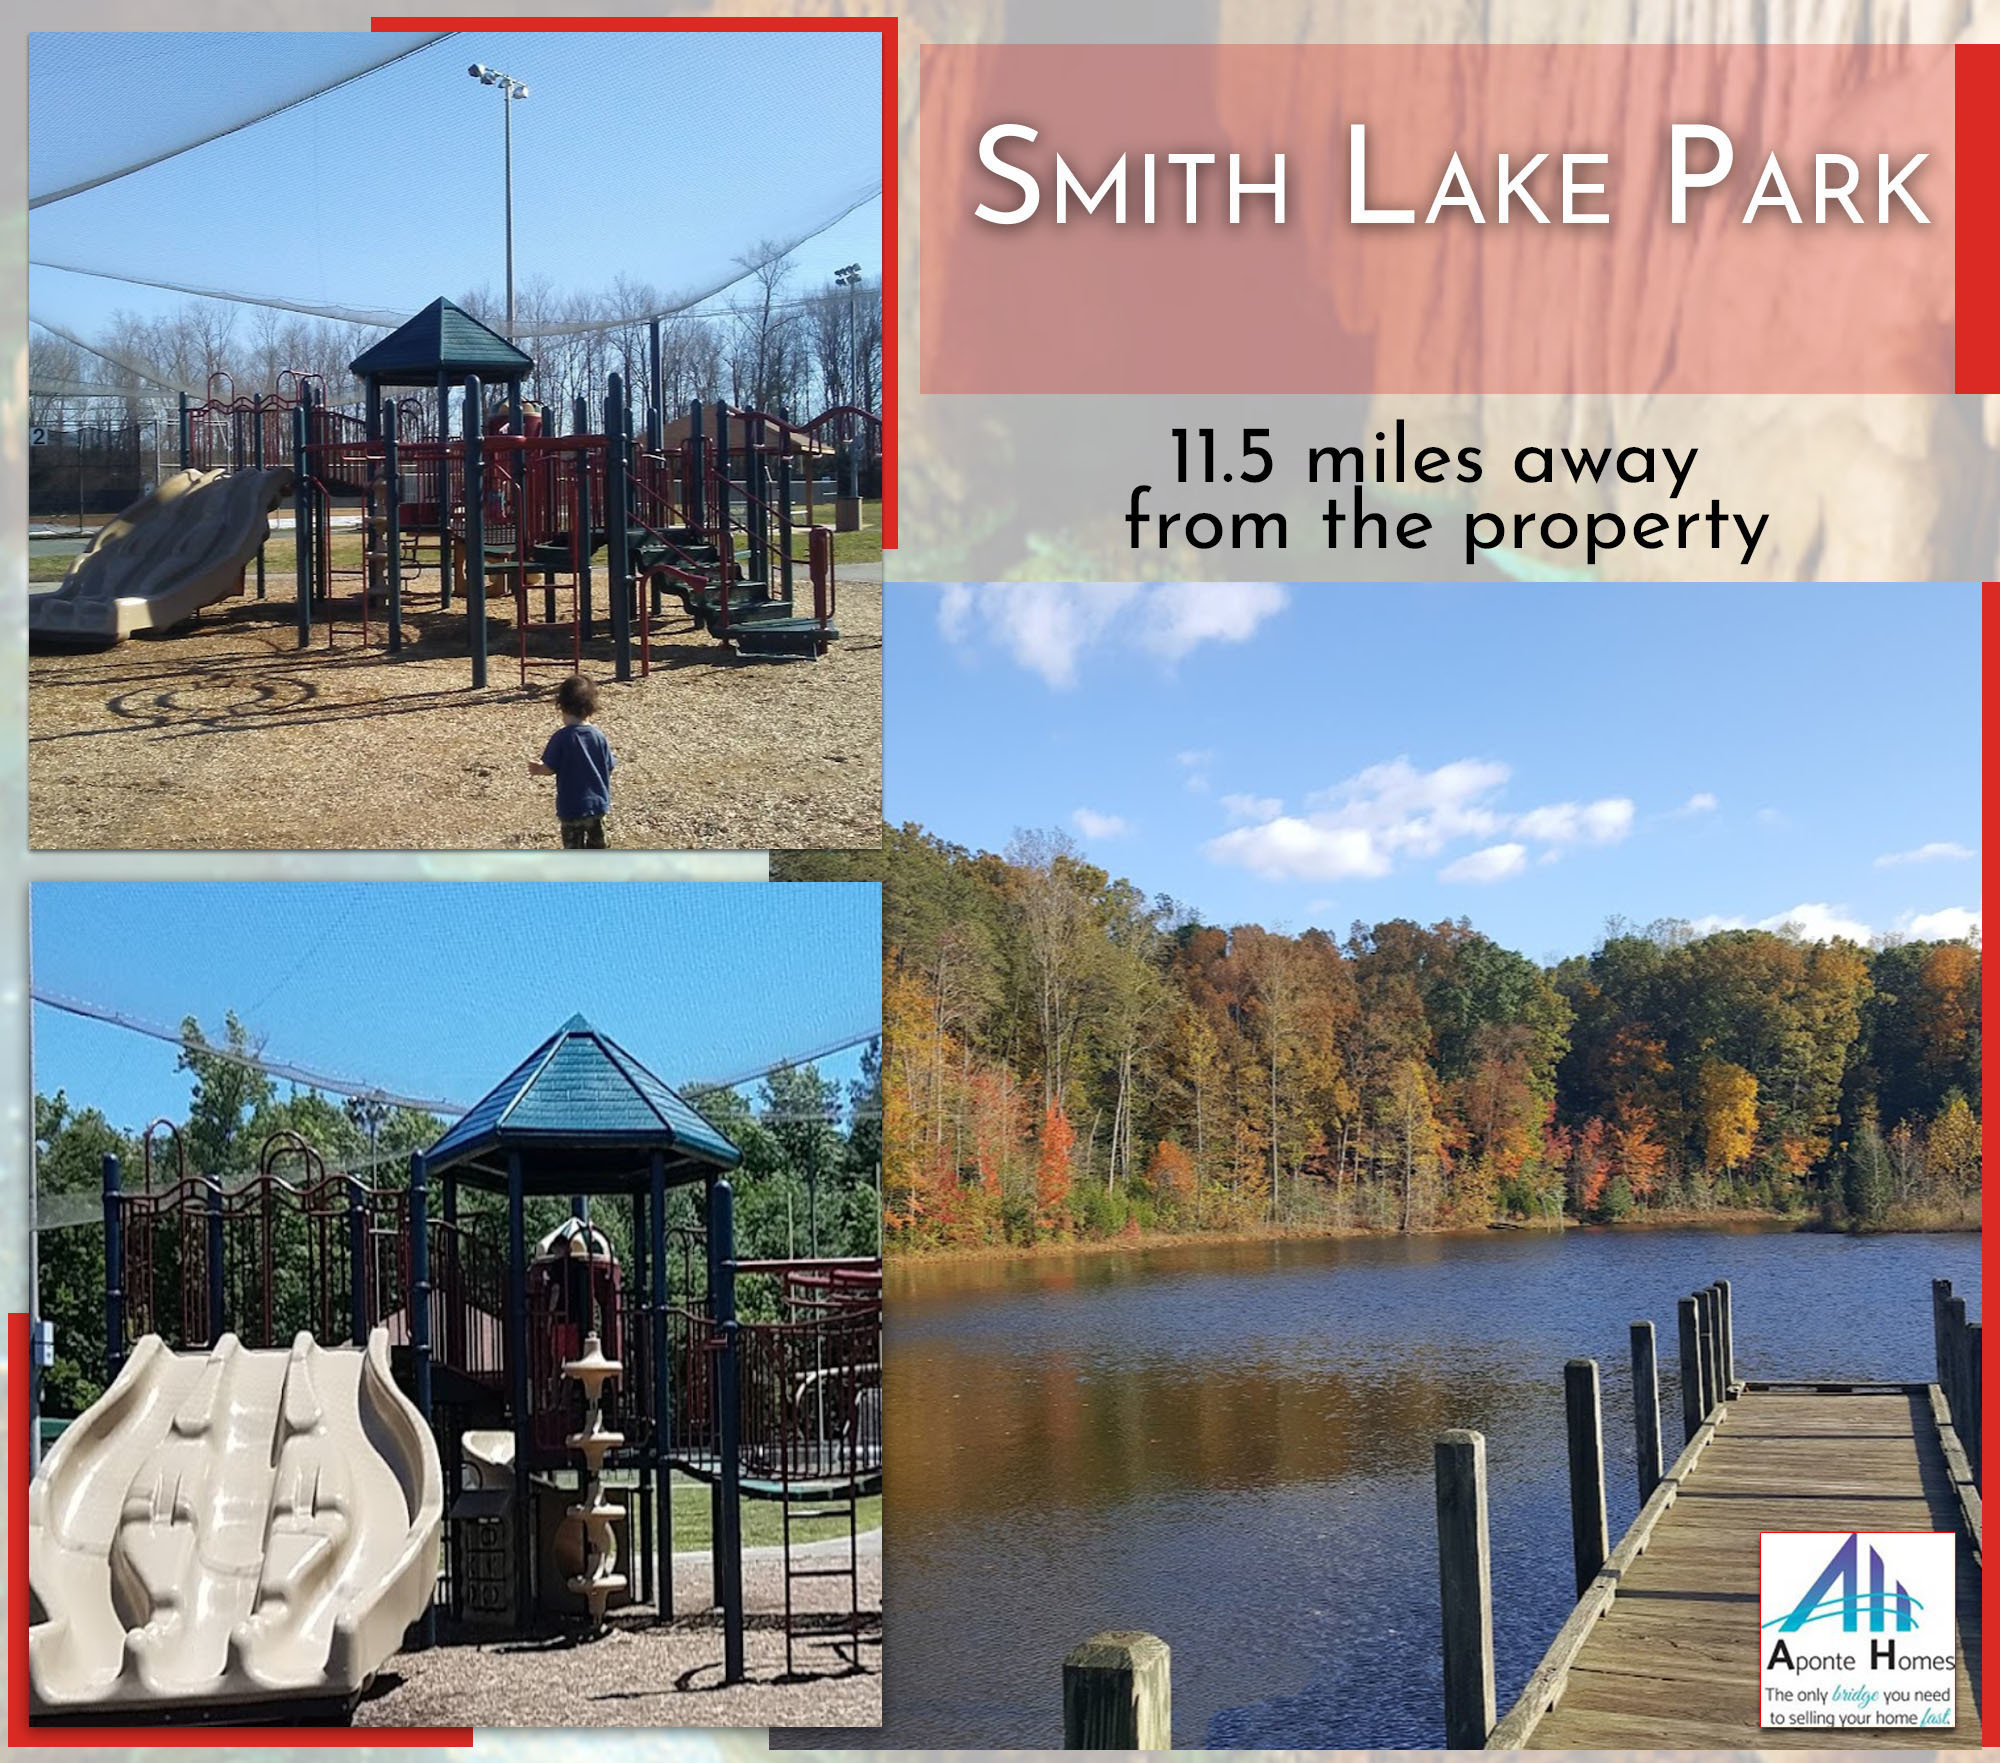 Smith Lake Park